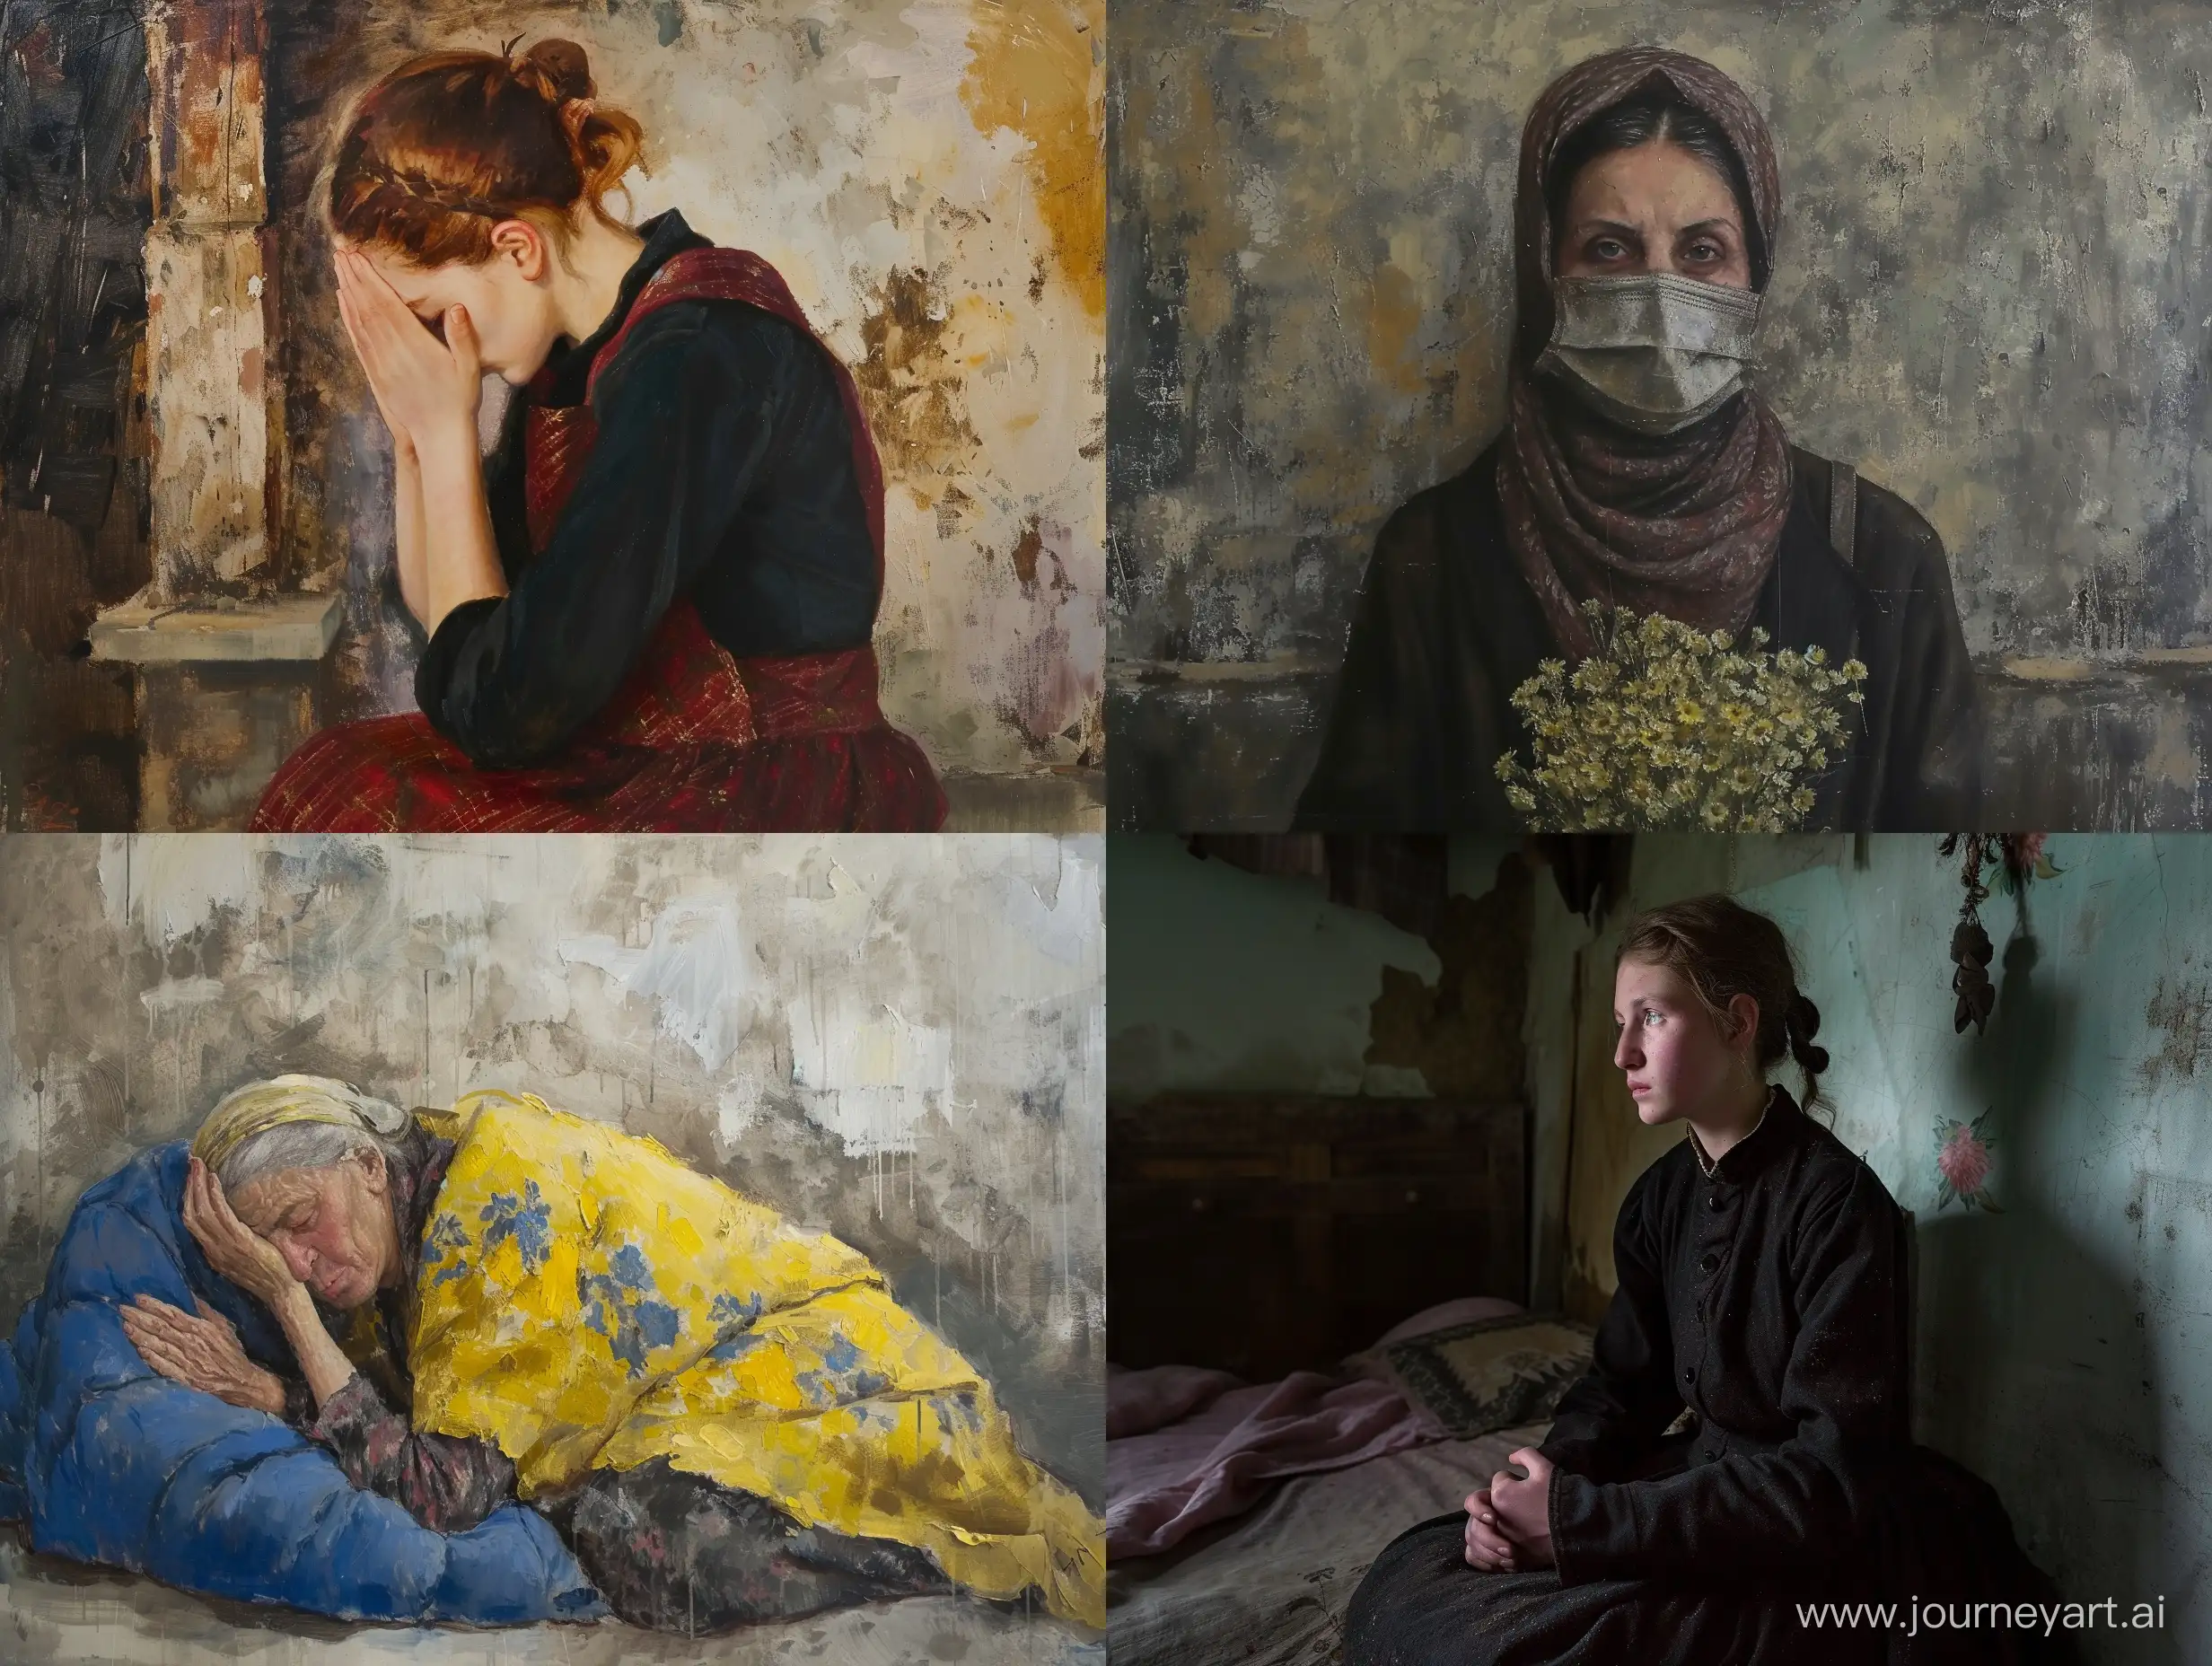 Lesya-Gasidzhak-Depicting-the-Ukrainian-Holodomor-Tragedy-in-a-Divine-Light